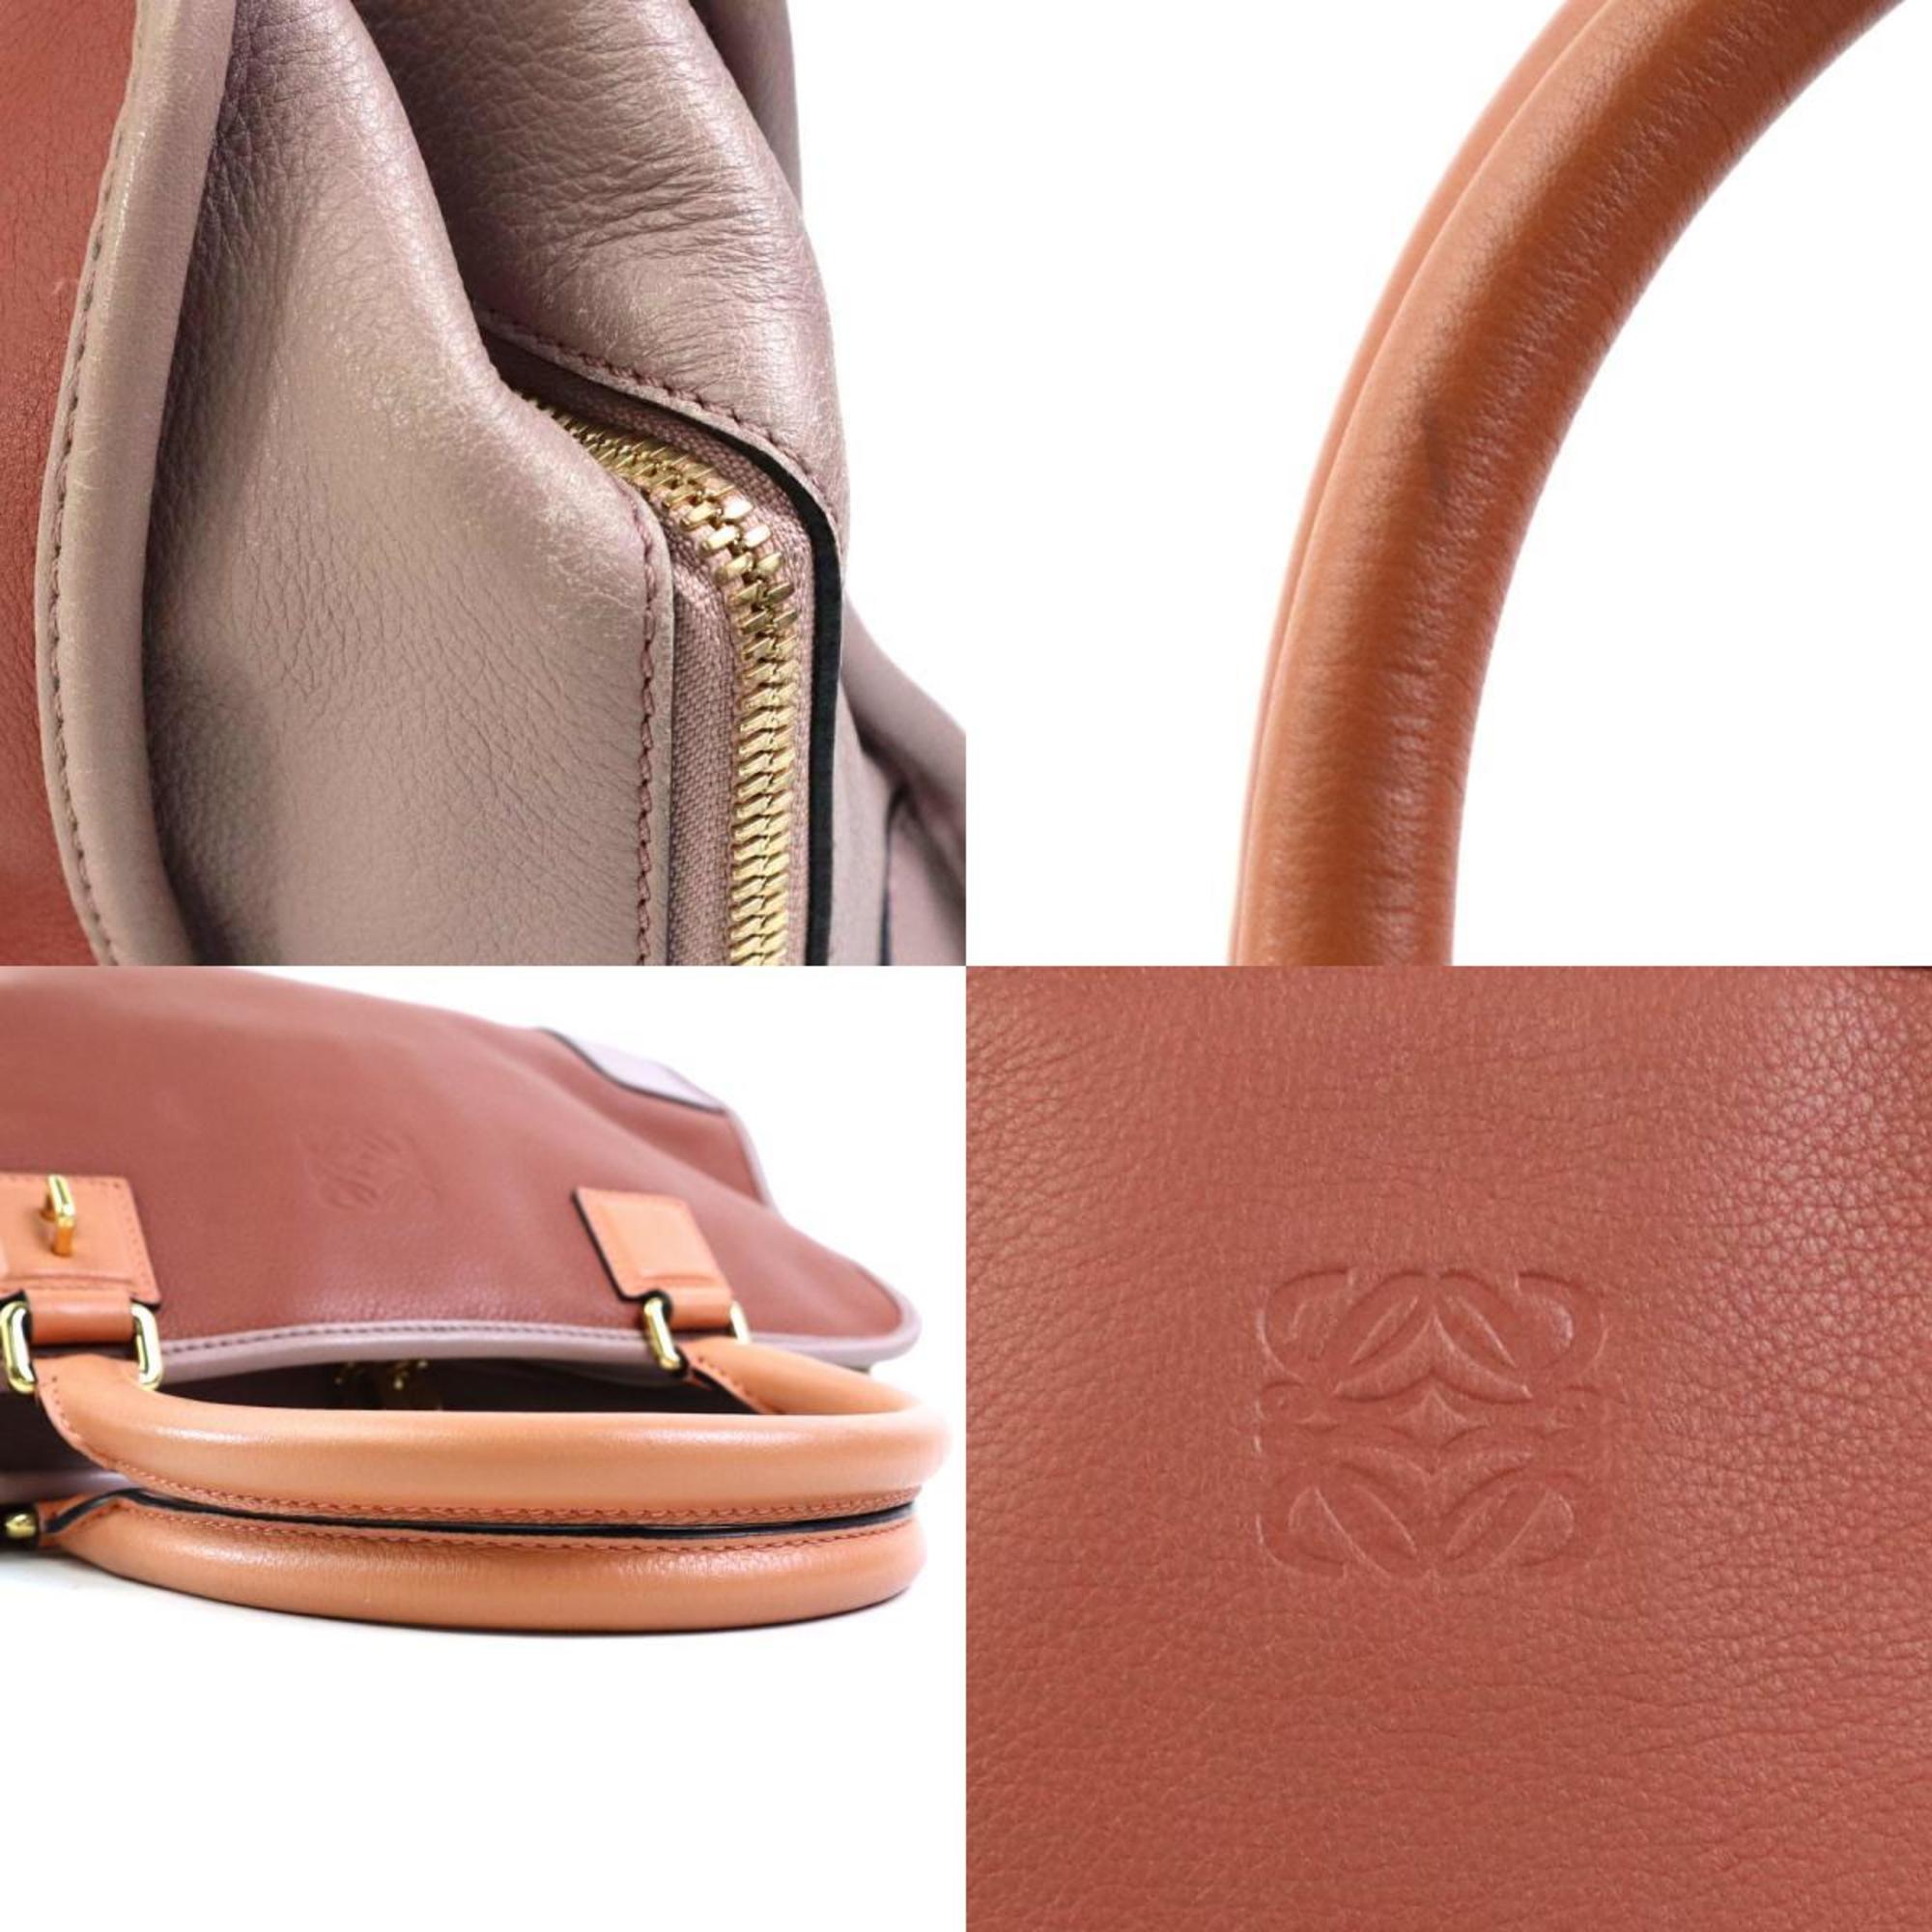 LOEWE Amazona Handbag Leather Brown Purple Beige Gold Women's e58741a